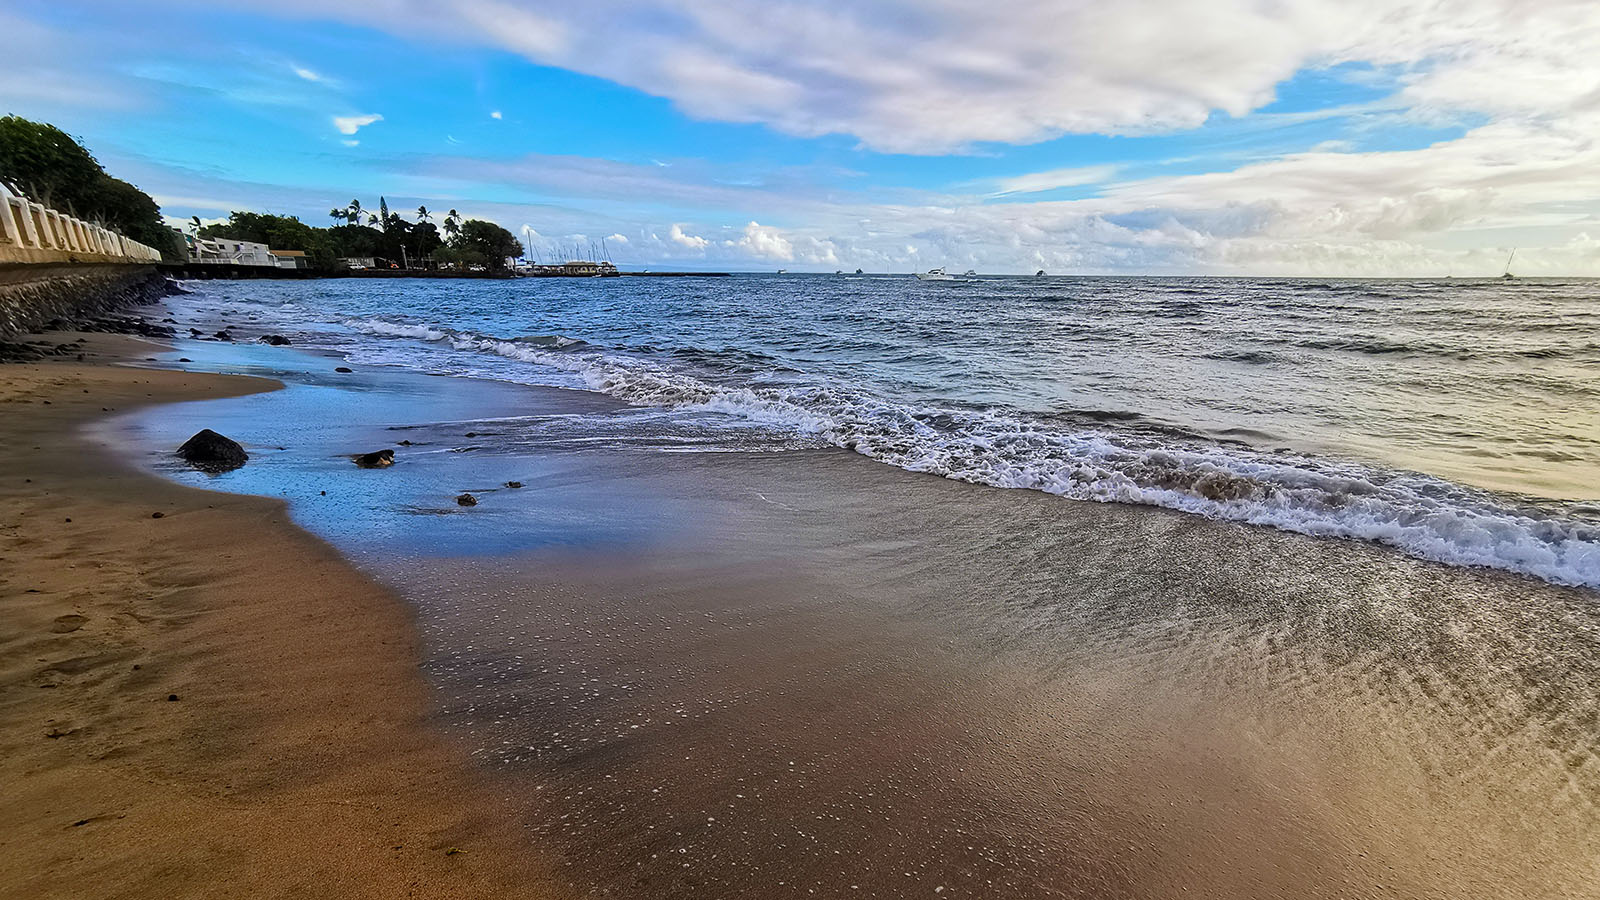 Sky reflects on beach in Hawaii